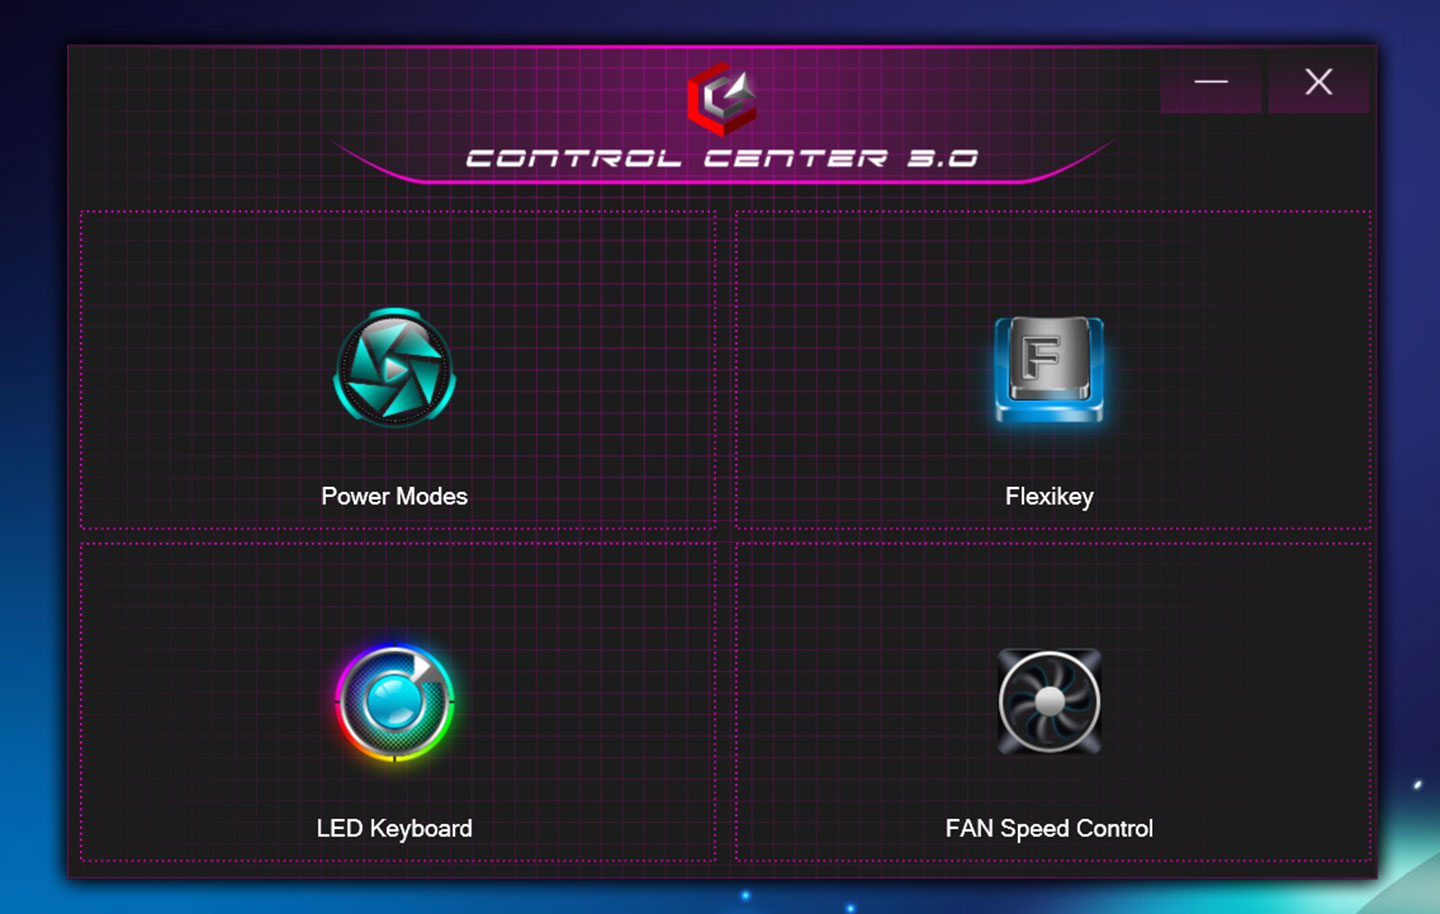 Genuine 捷元 ZEUS 15H 內建了「Control Center 3.0」工具，可快速呼叫運行模式（Power Modes）、鍵盤功能設定（Flexikey）、鍵盤背光設定（LED Keyboard）與風扇運行切換（FAN Speed Control）這主要功能。